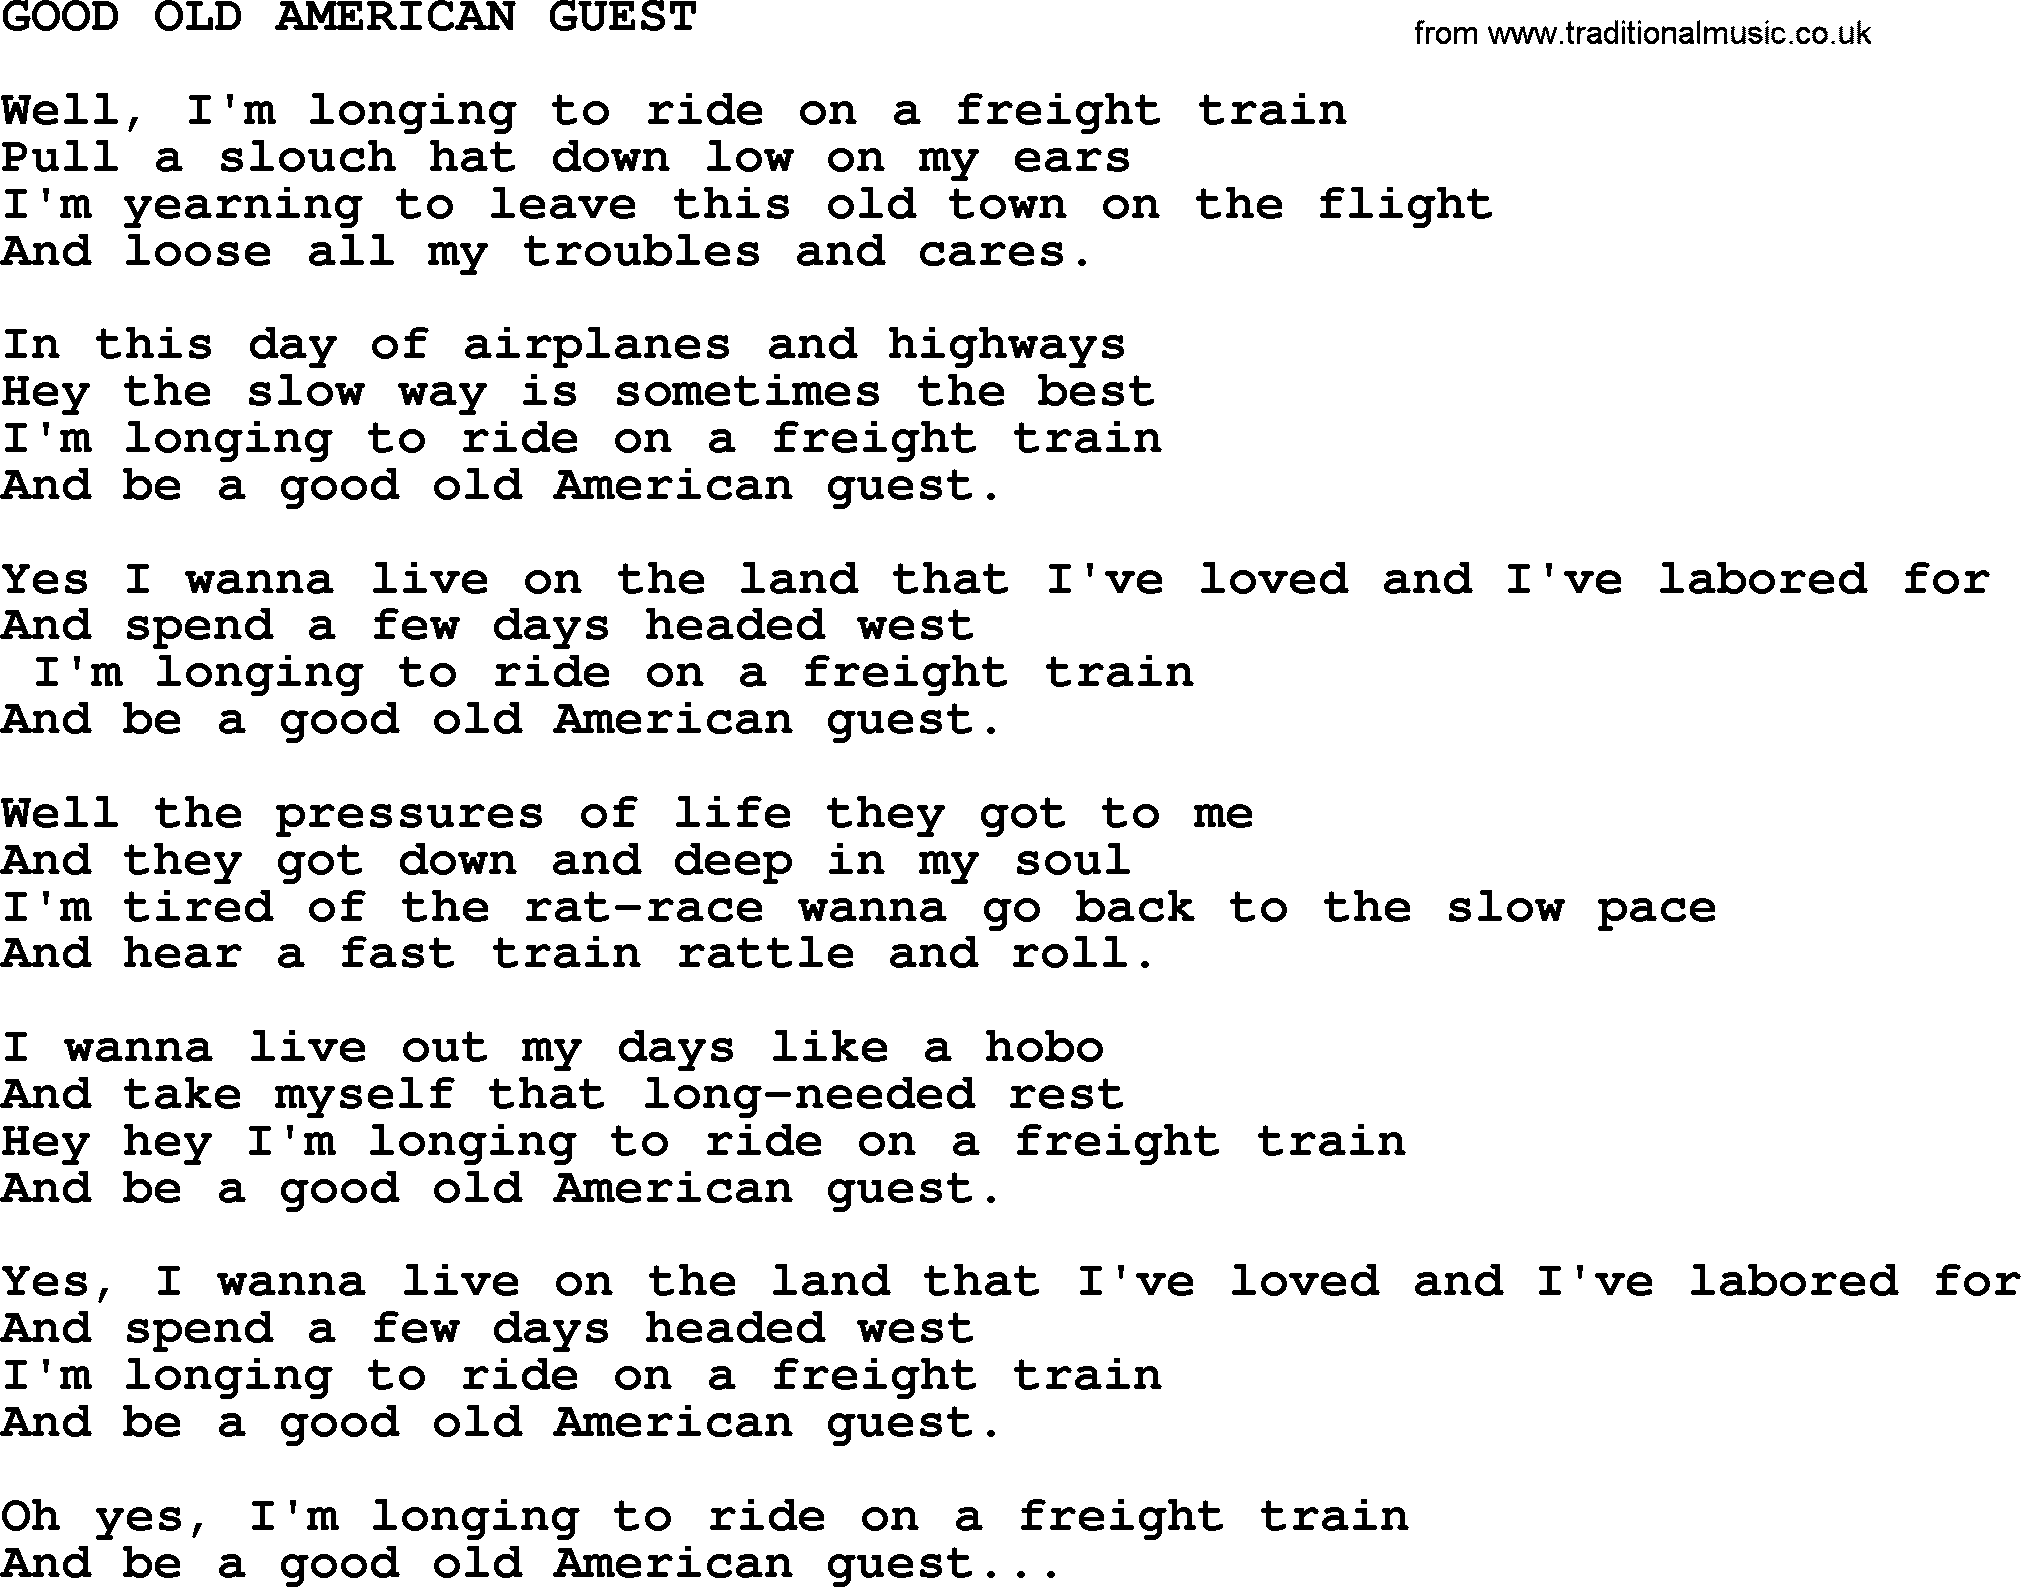 Merle Haggard song: Good Old American Guest, lyrics.